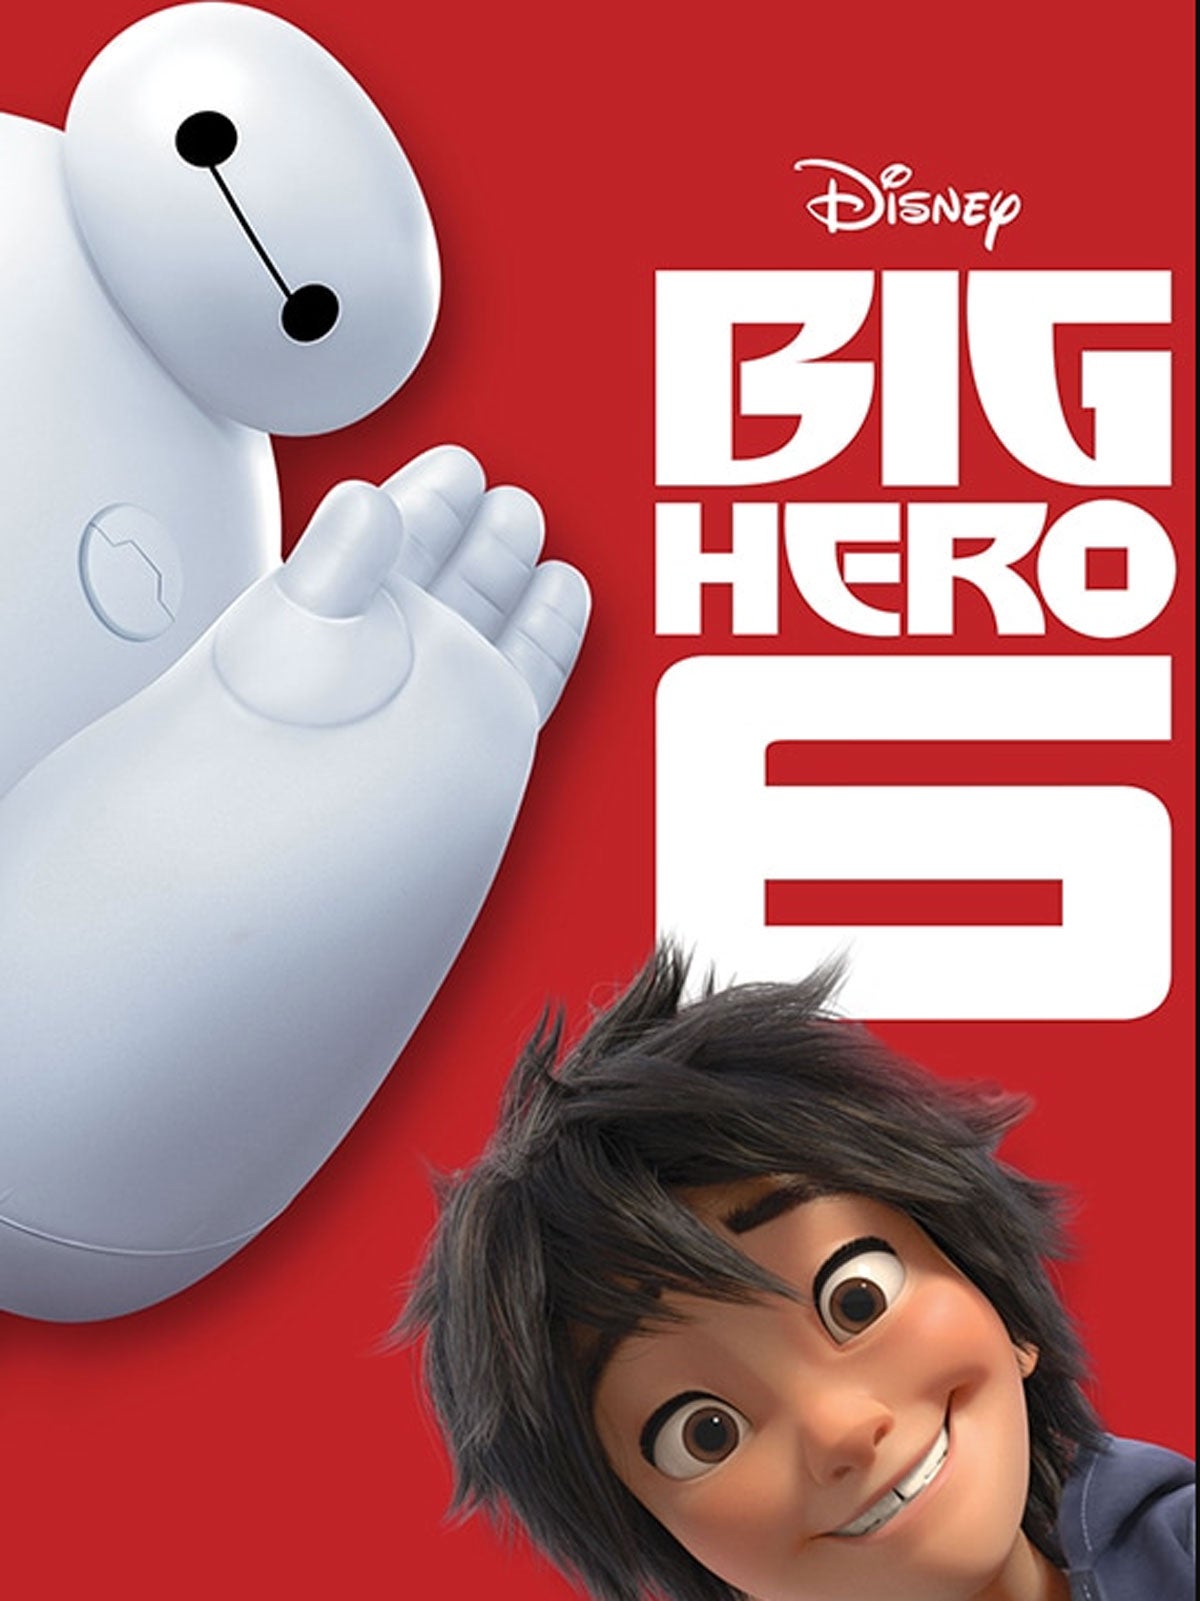 Big Hero 6 movie poster